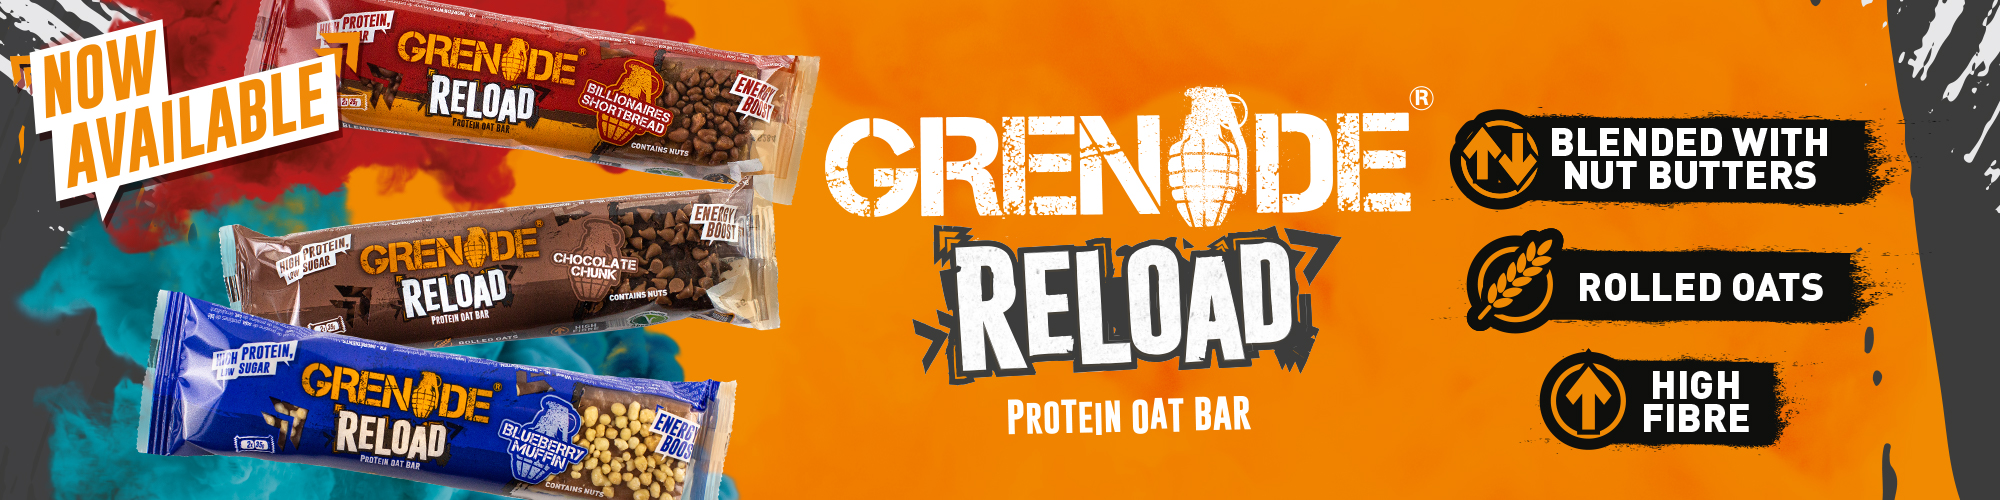 Grenade Reload protein oat bar